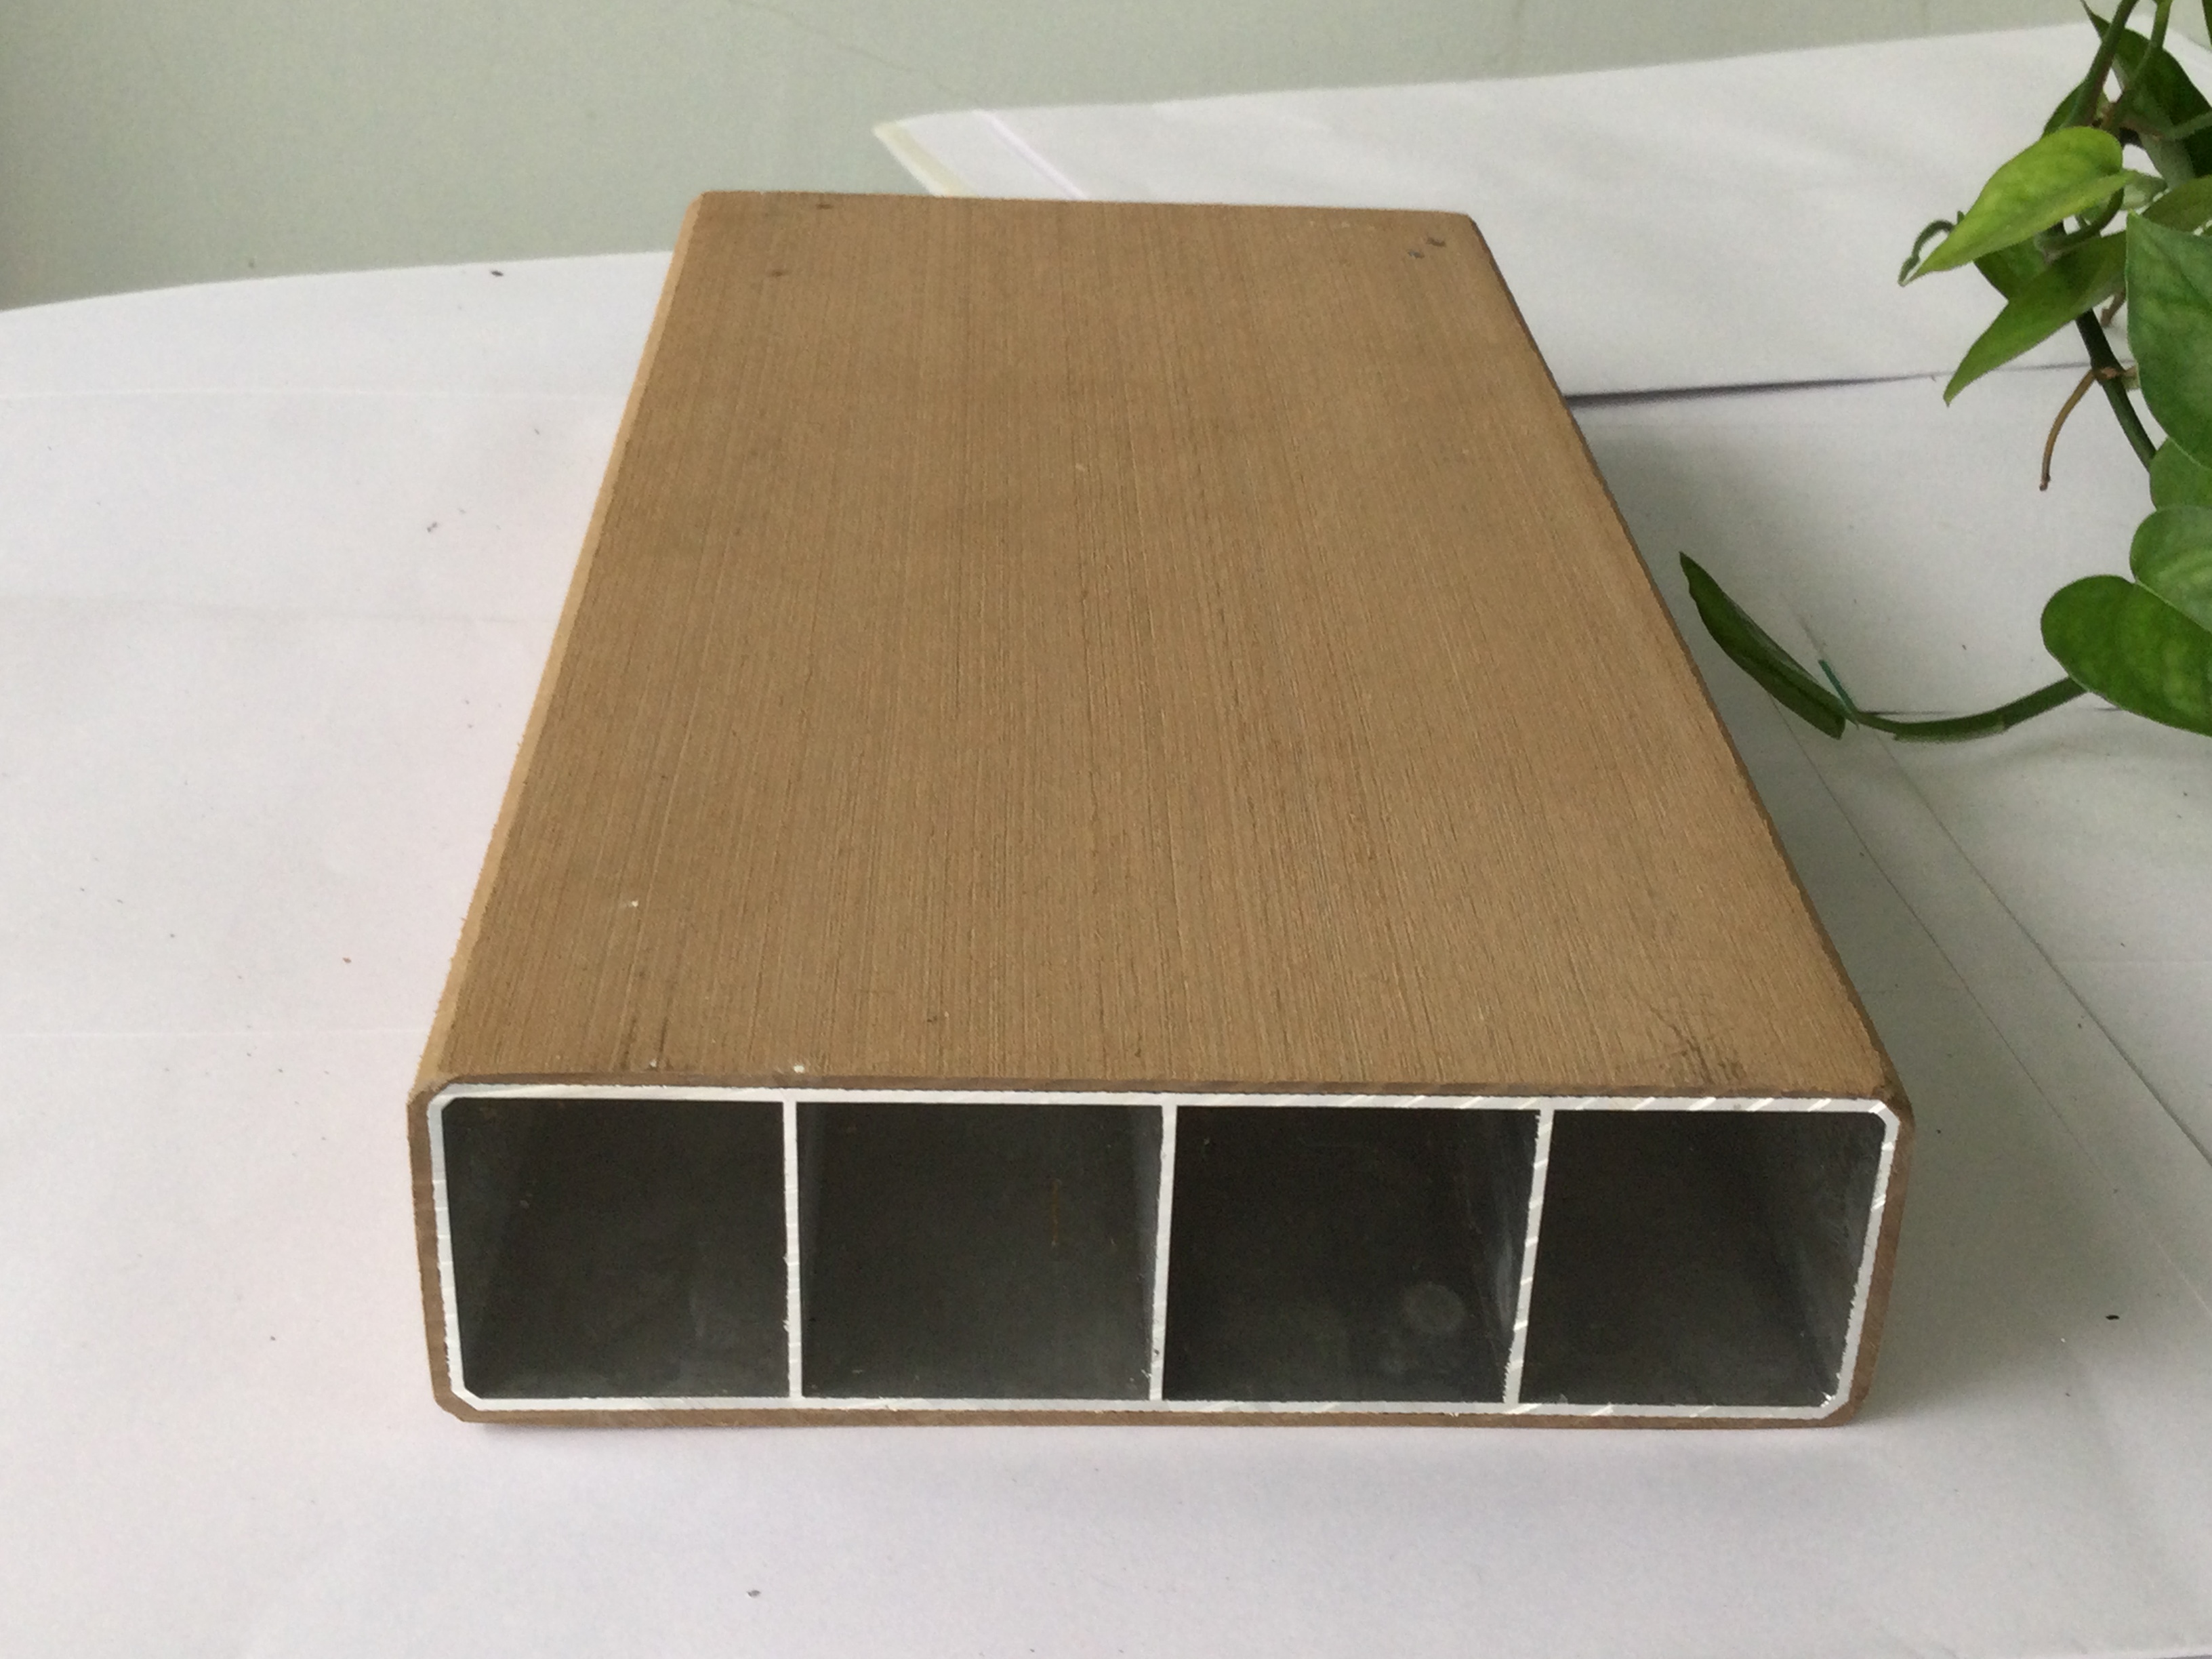 Thanh lam gỗ nhôm nhựa Alwood ALPO45150